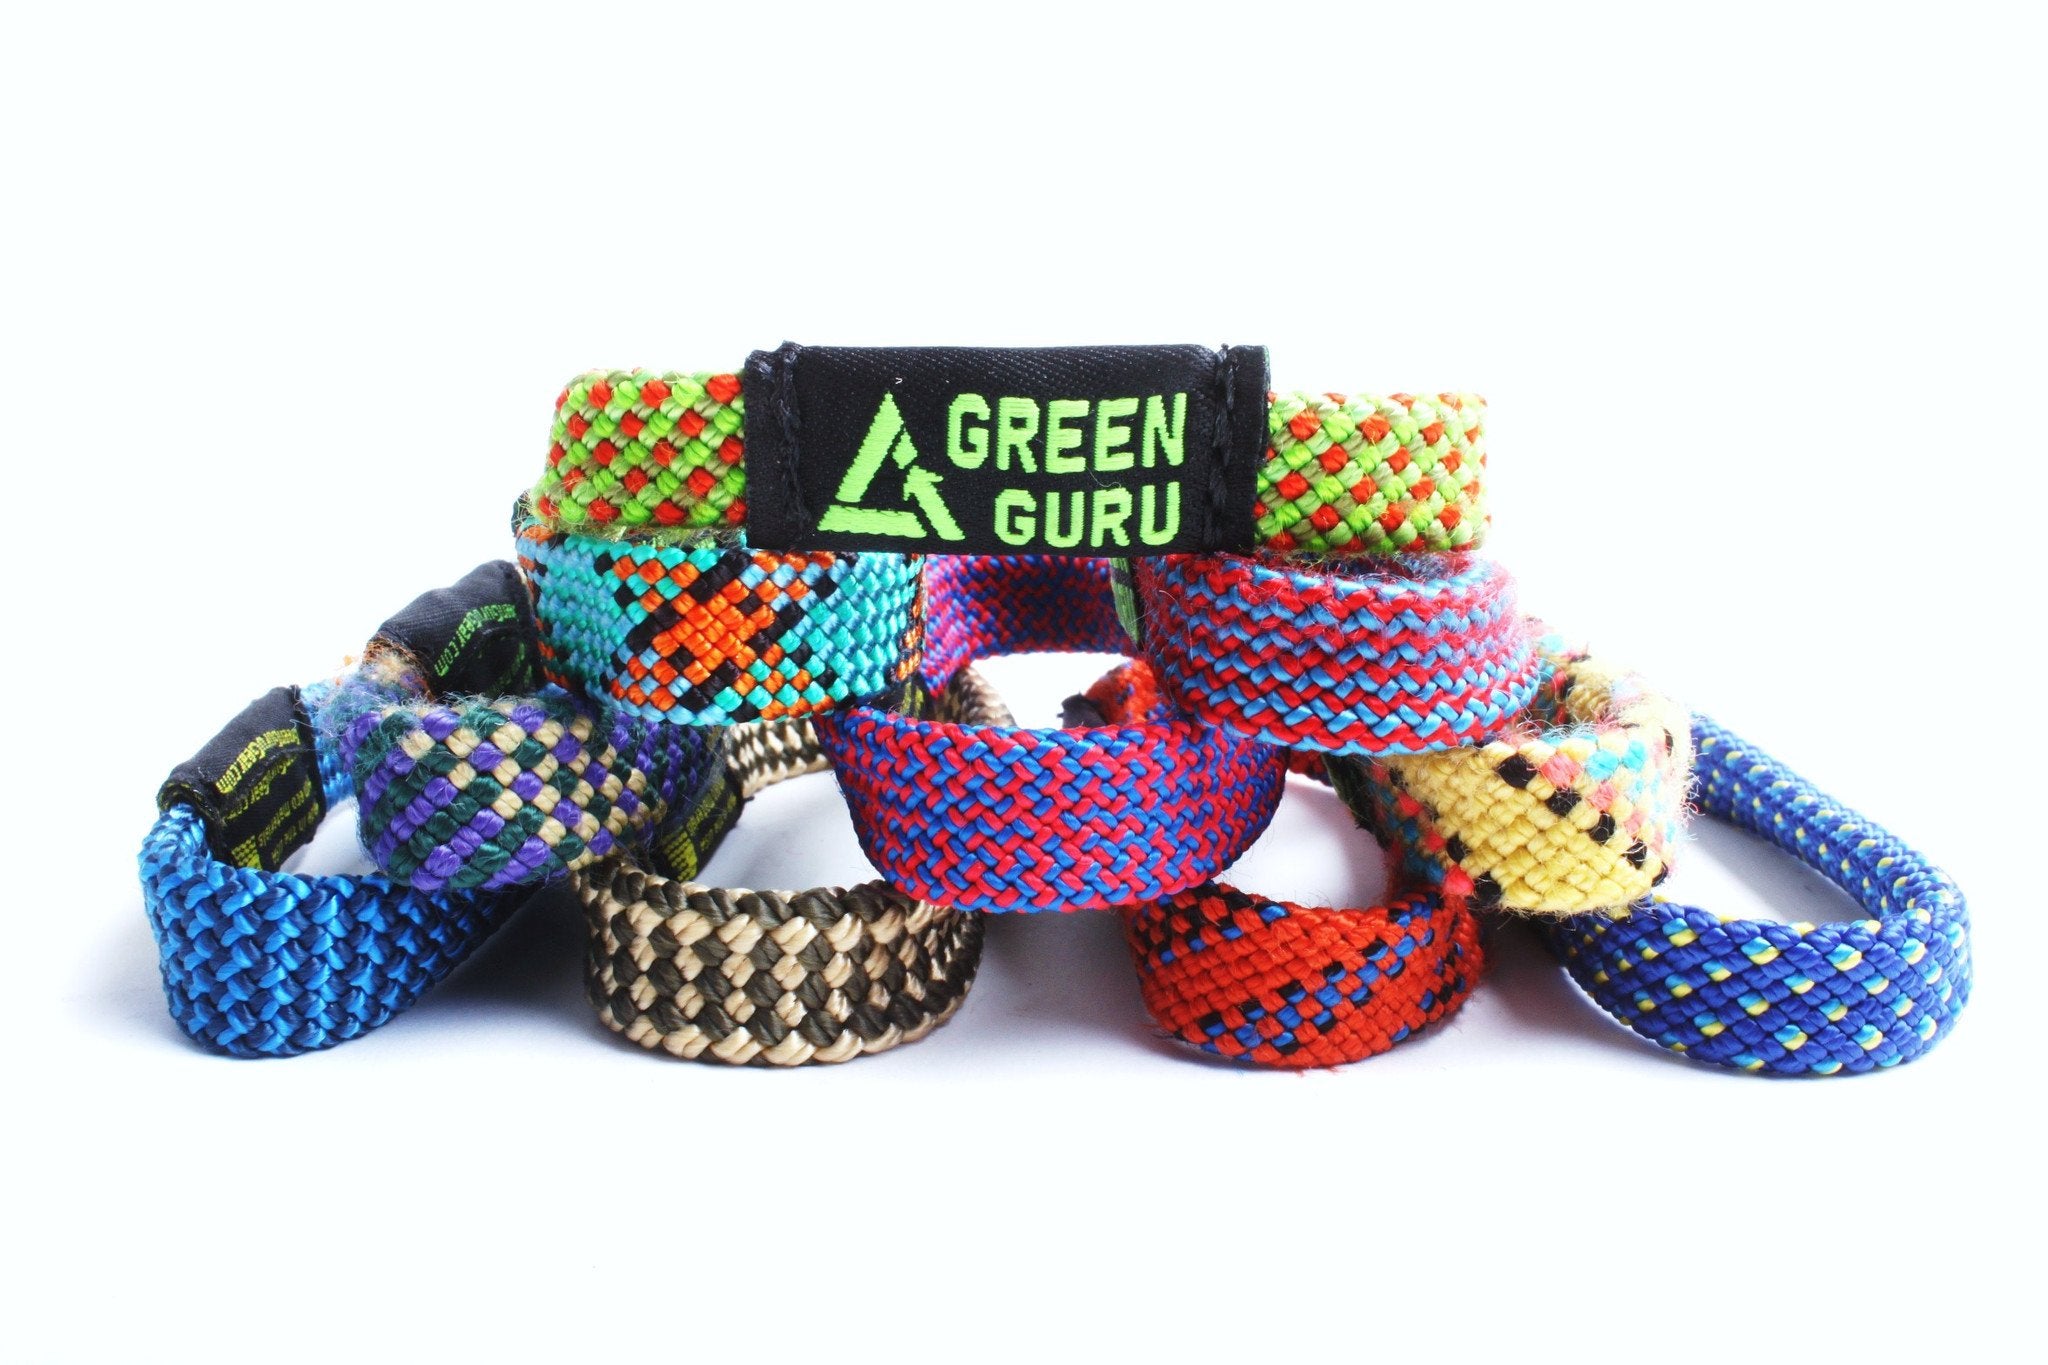 Climbing Rope Bracelet (Sold as Singles) Climbing Rope Bracelets Green Guru Gear 